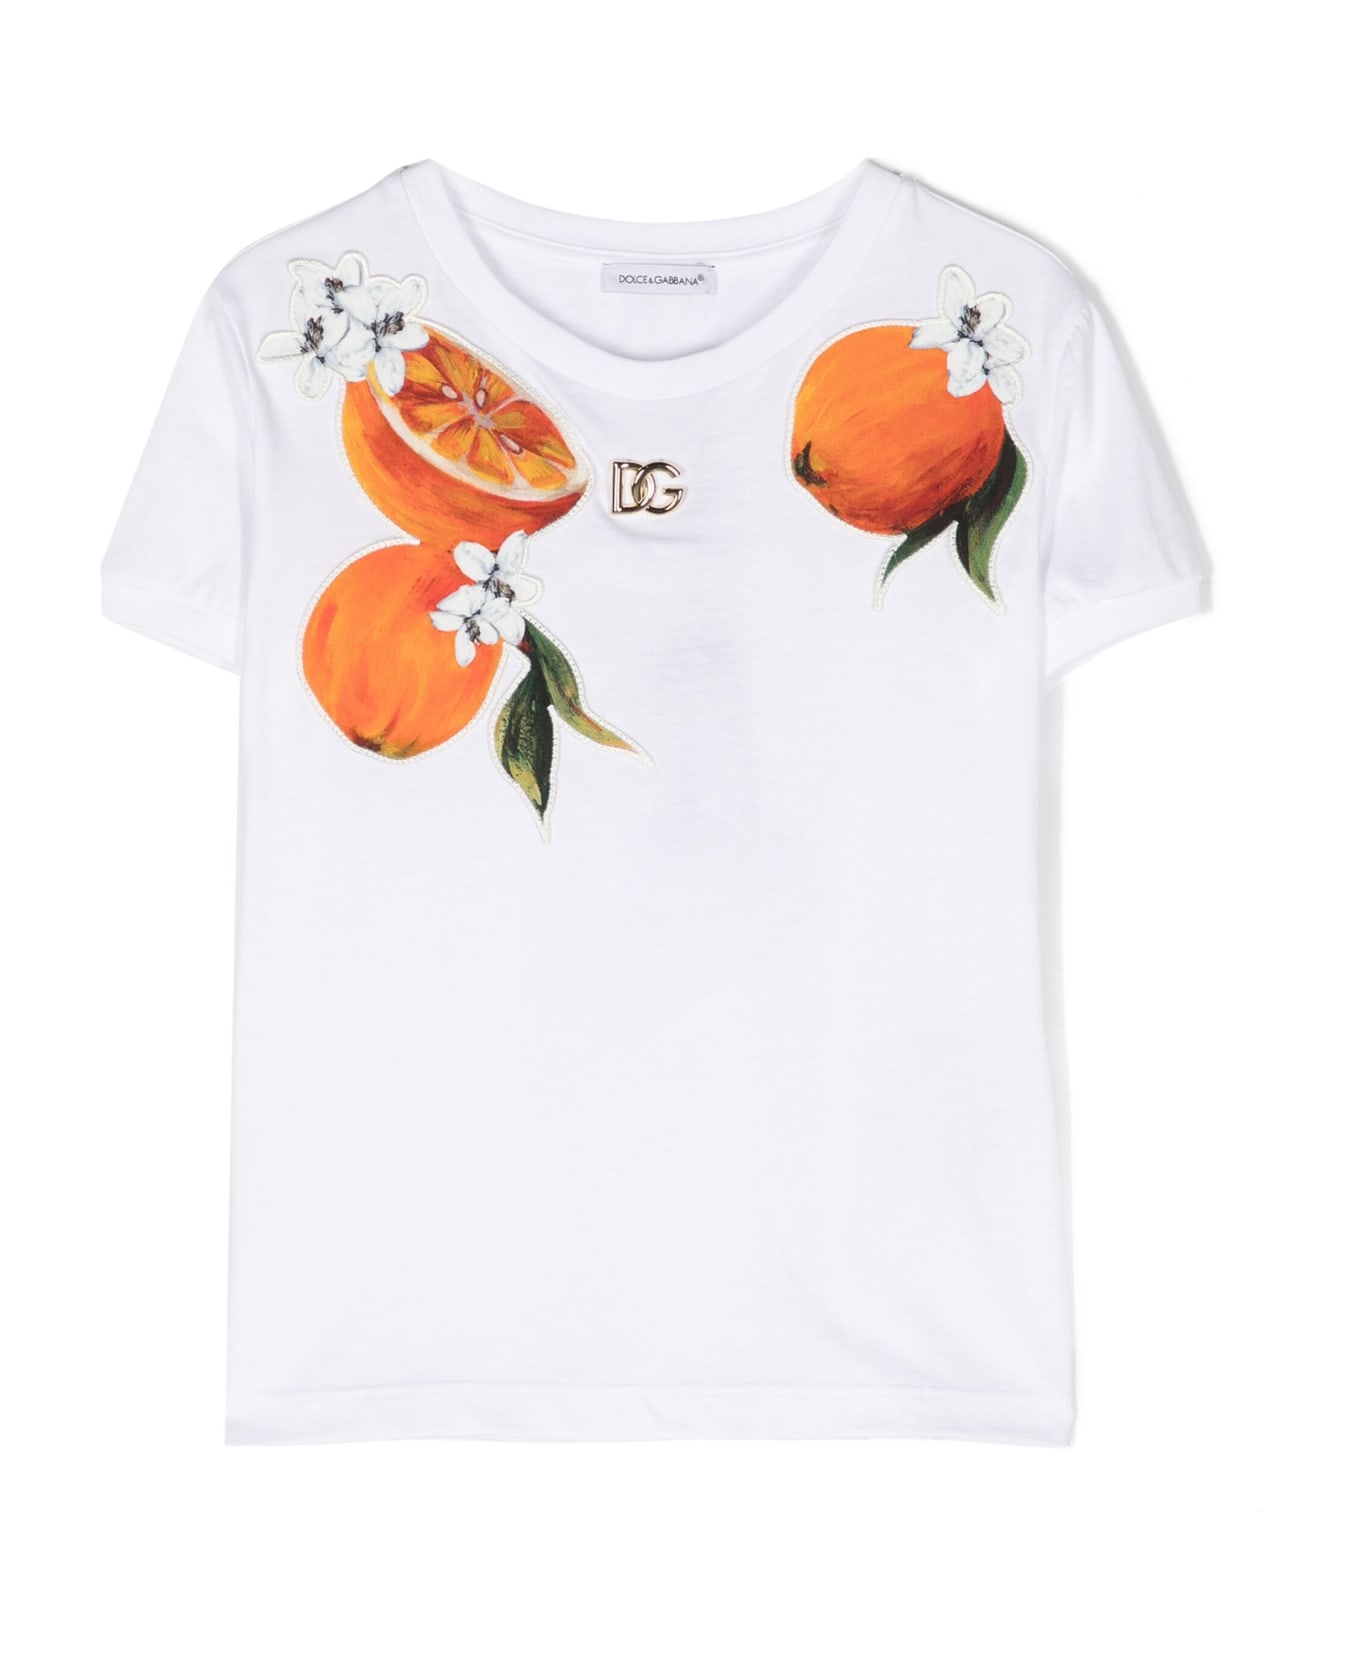 Dolce & Gabbana White T-shirt With Oranges Print - Bianco